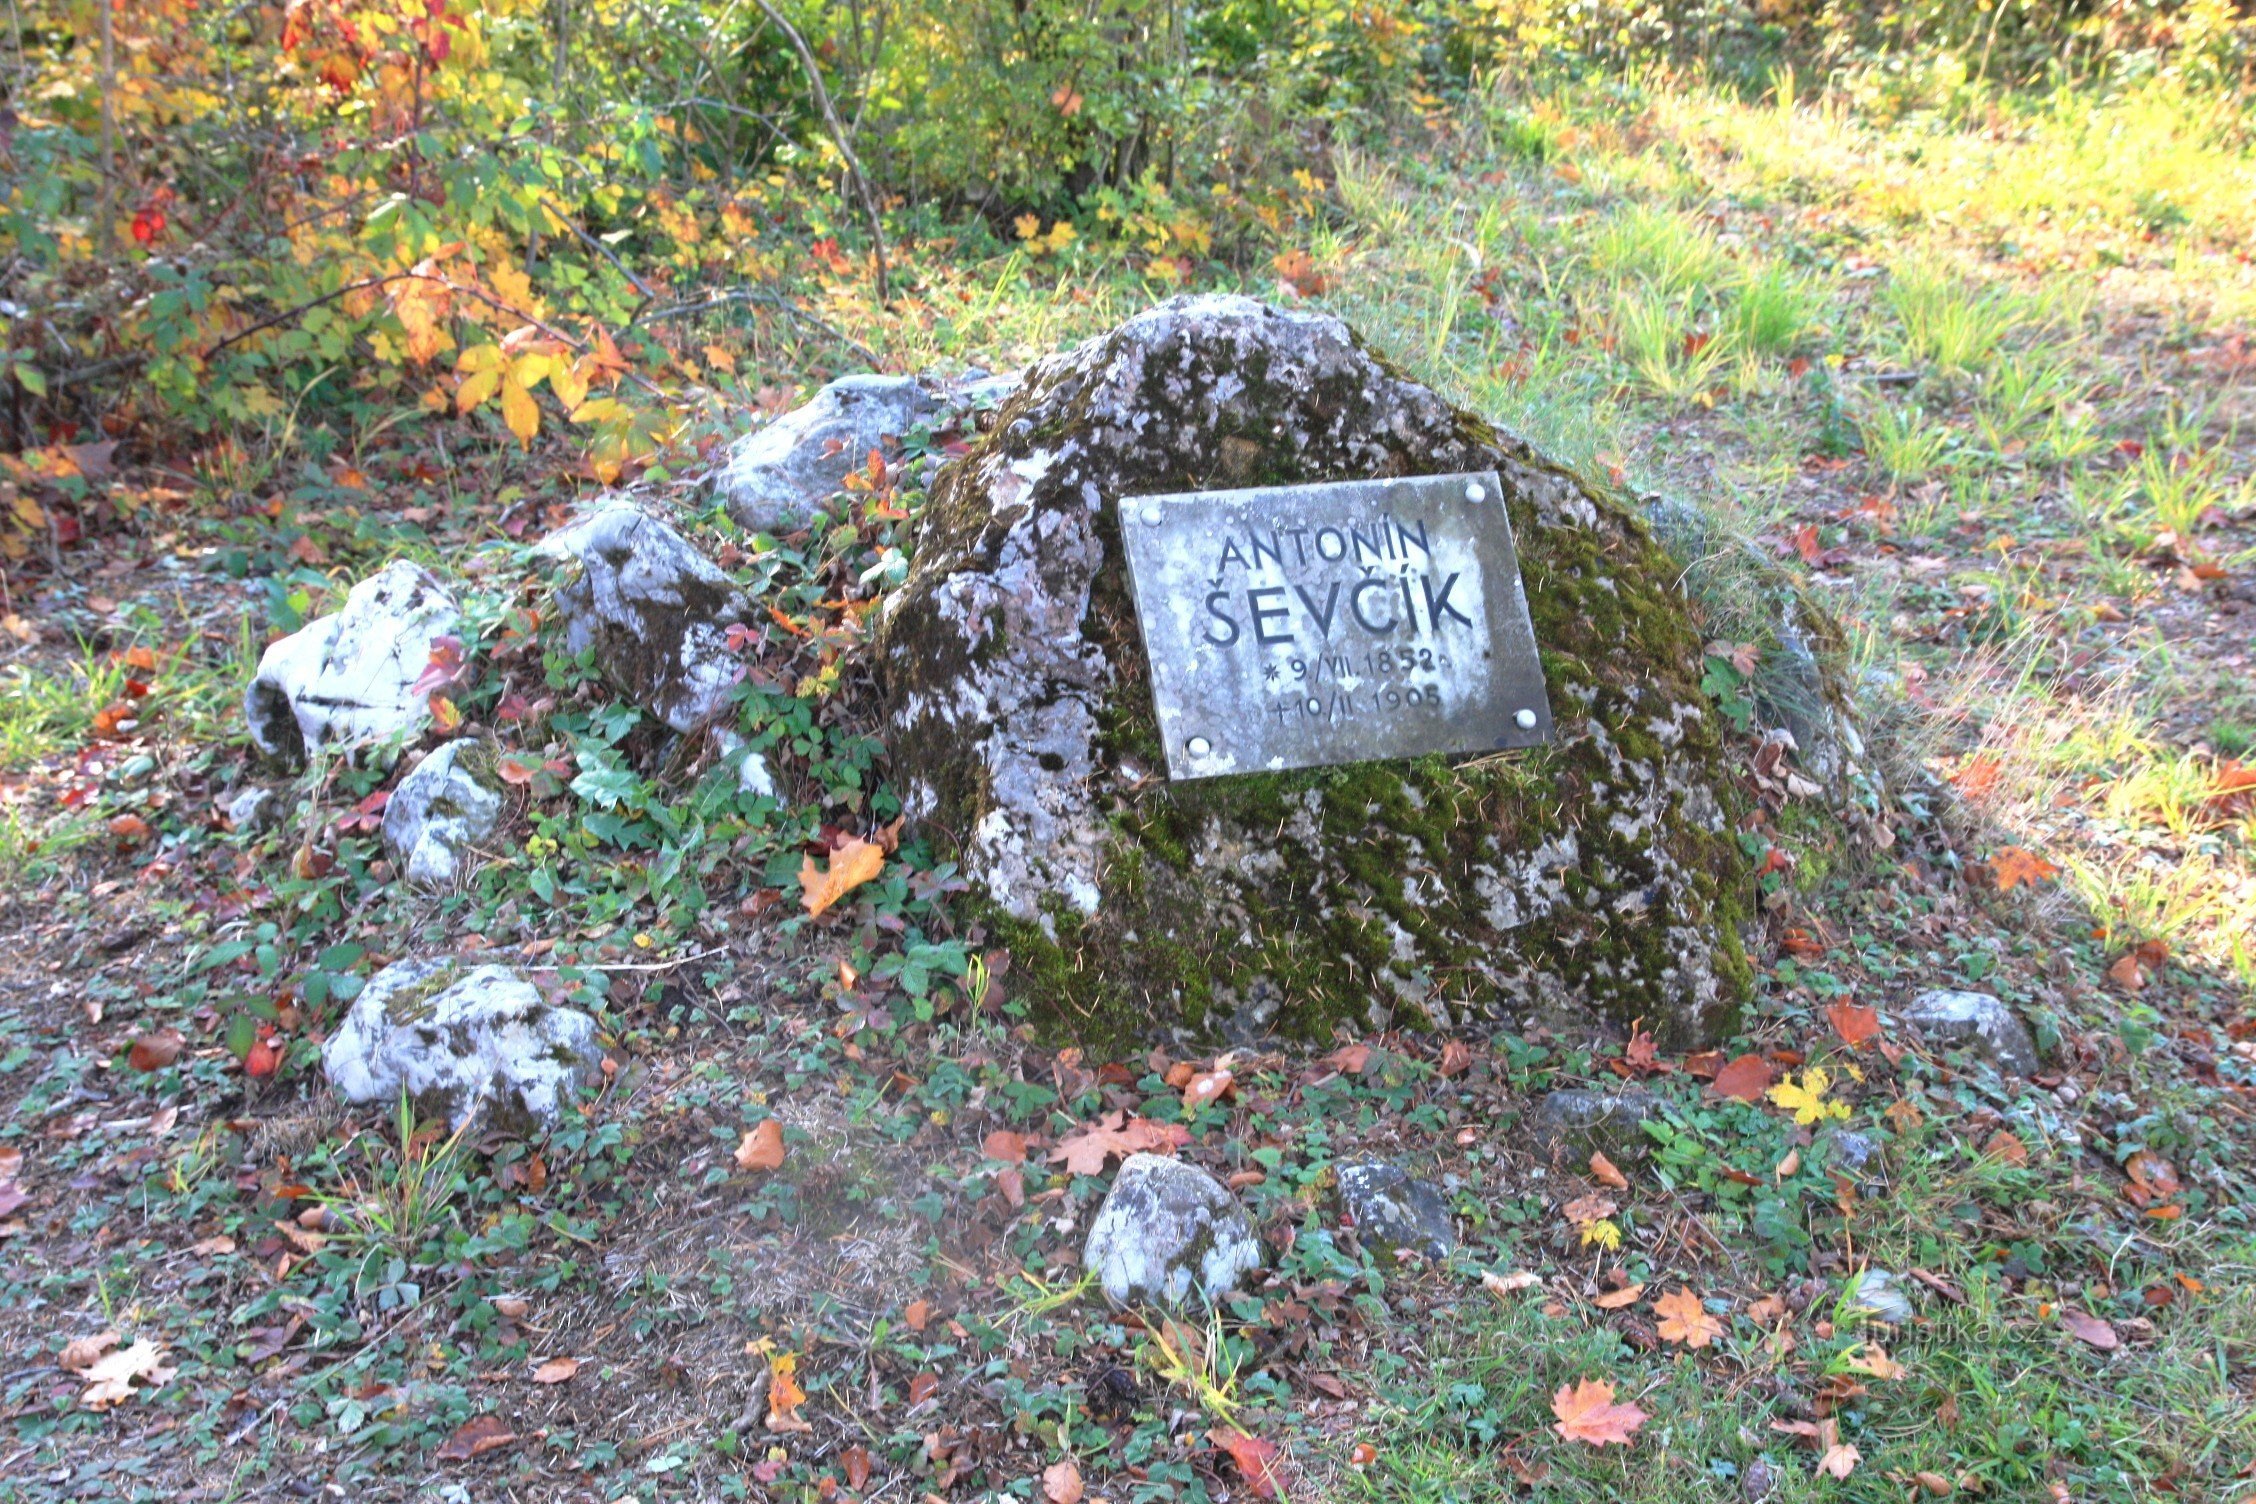 Schatt's journey begins at the monument to A. Ševčík